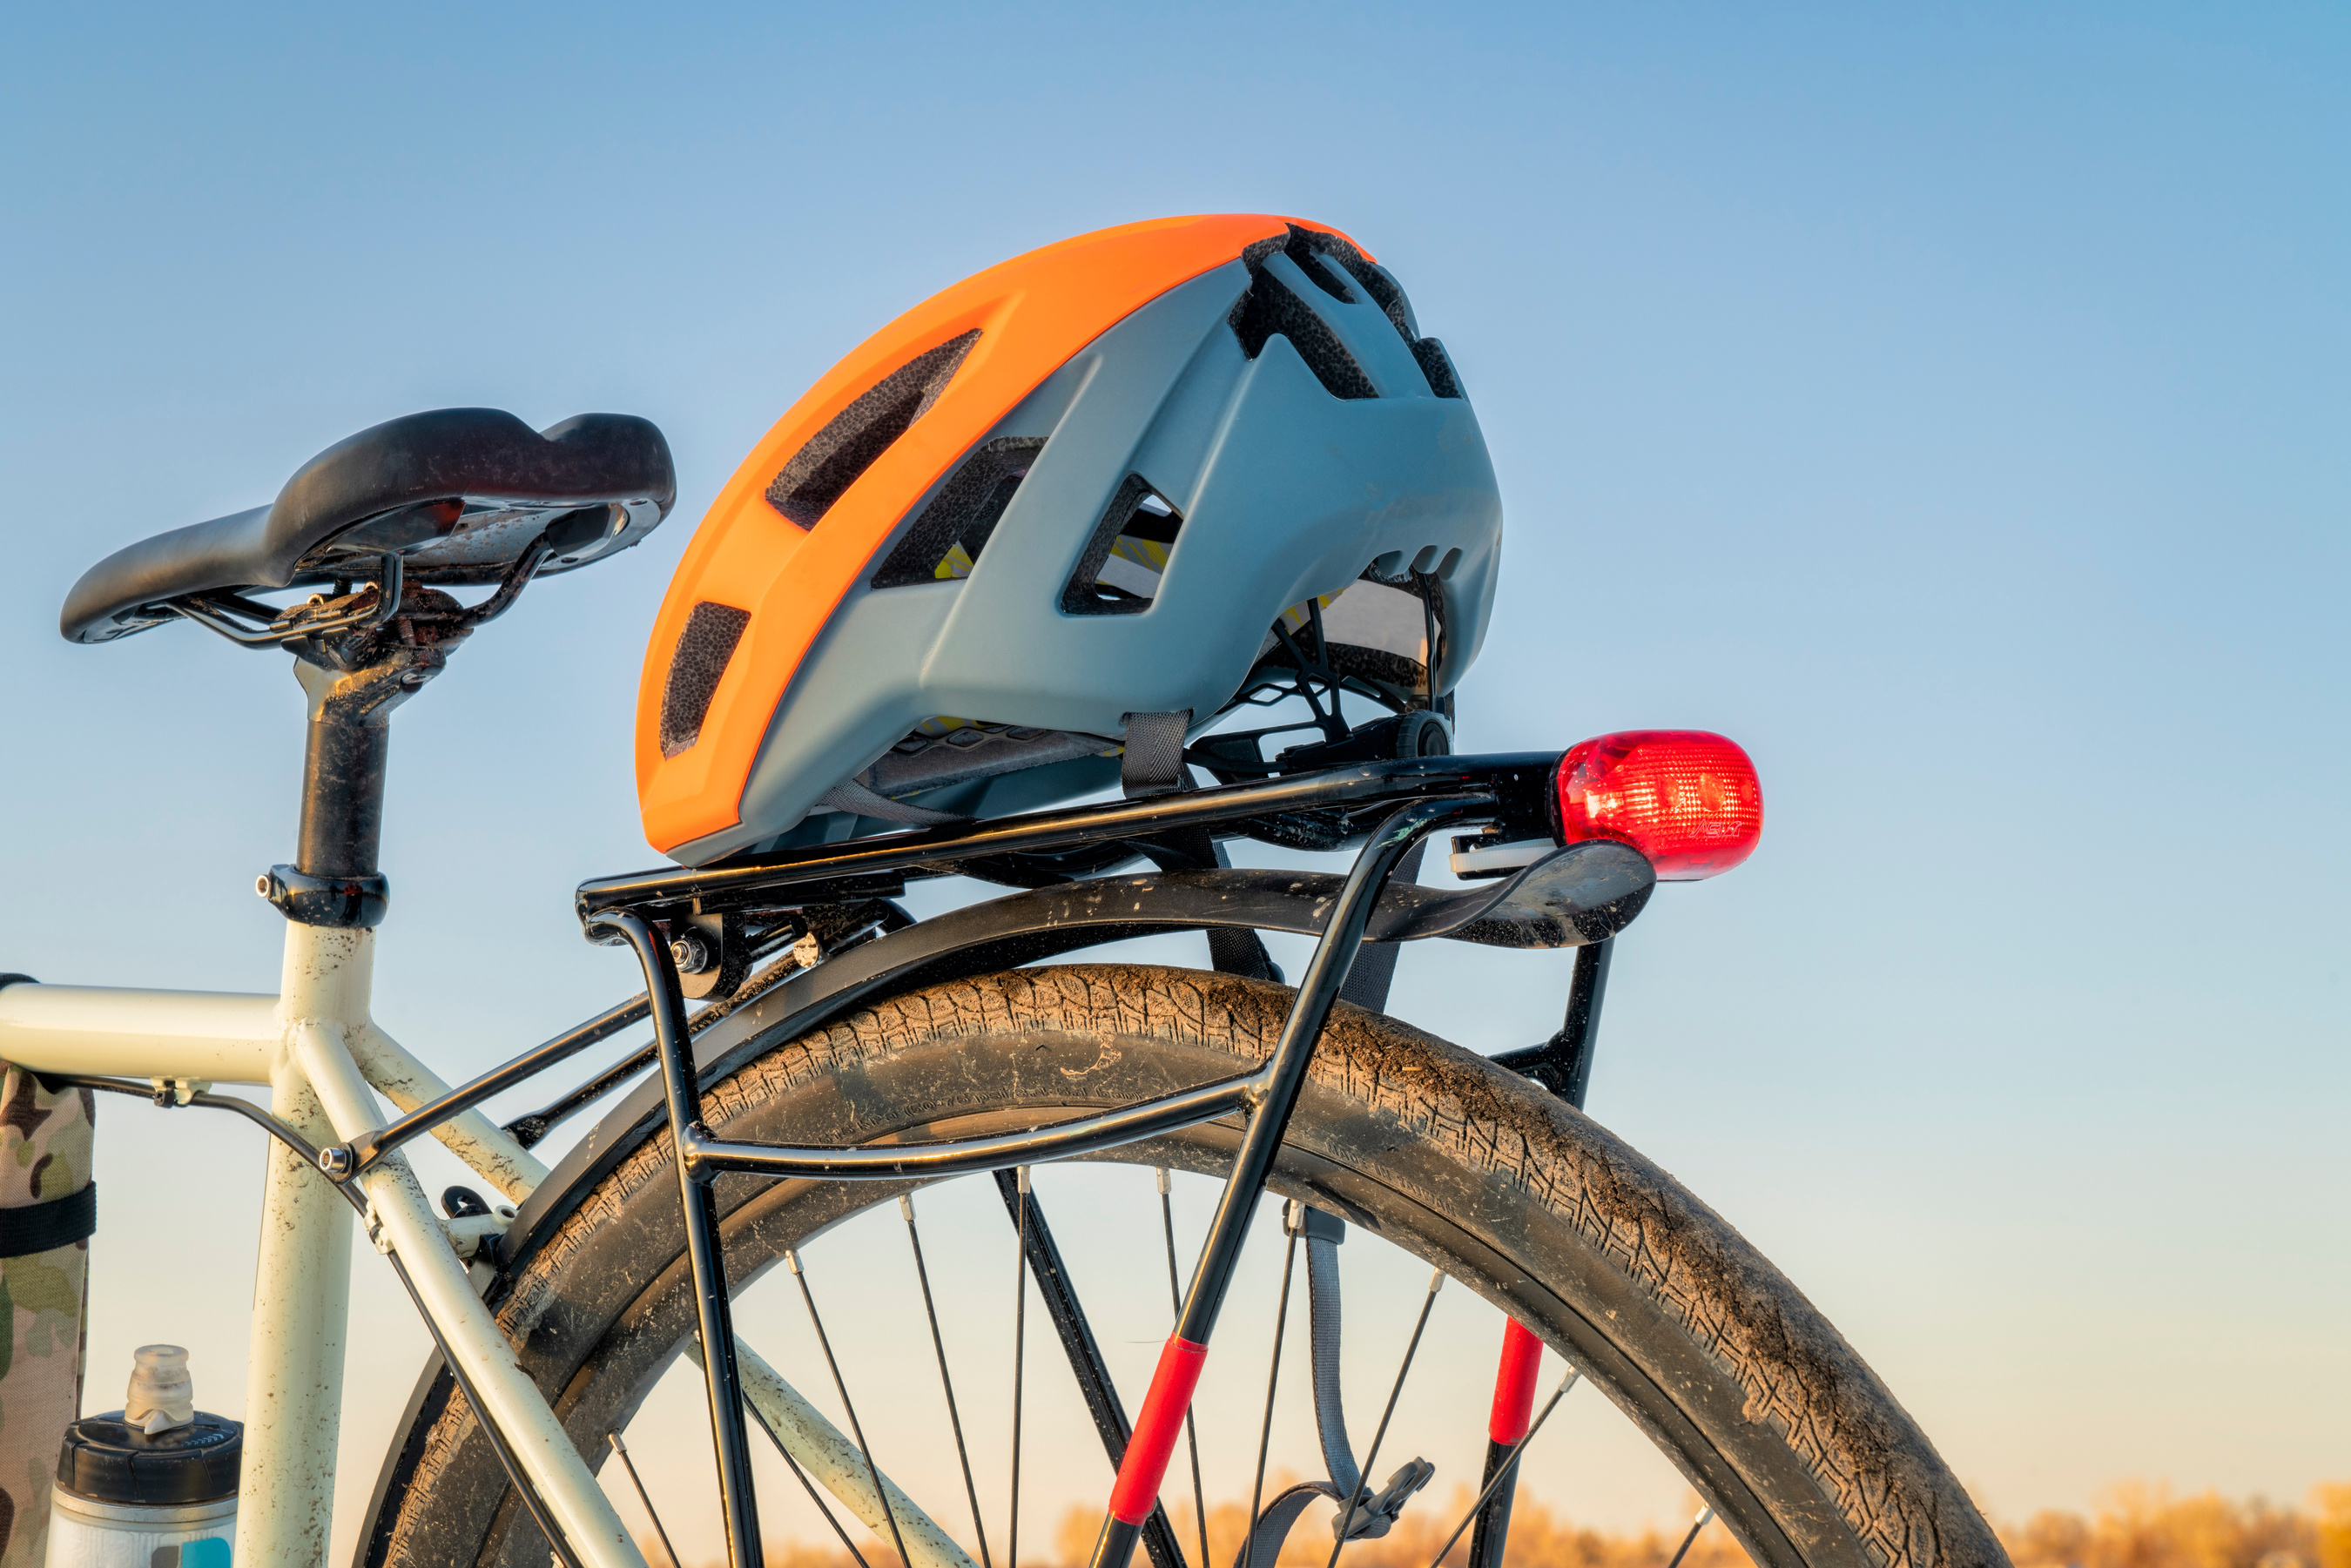 biking helmet on racks of a touring bike